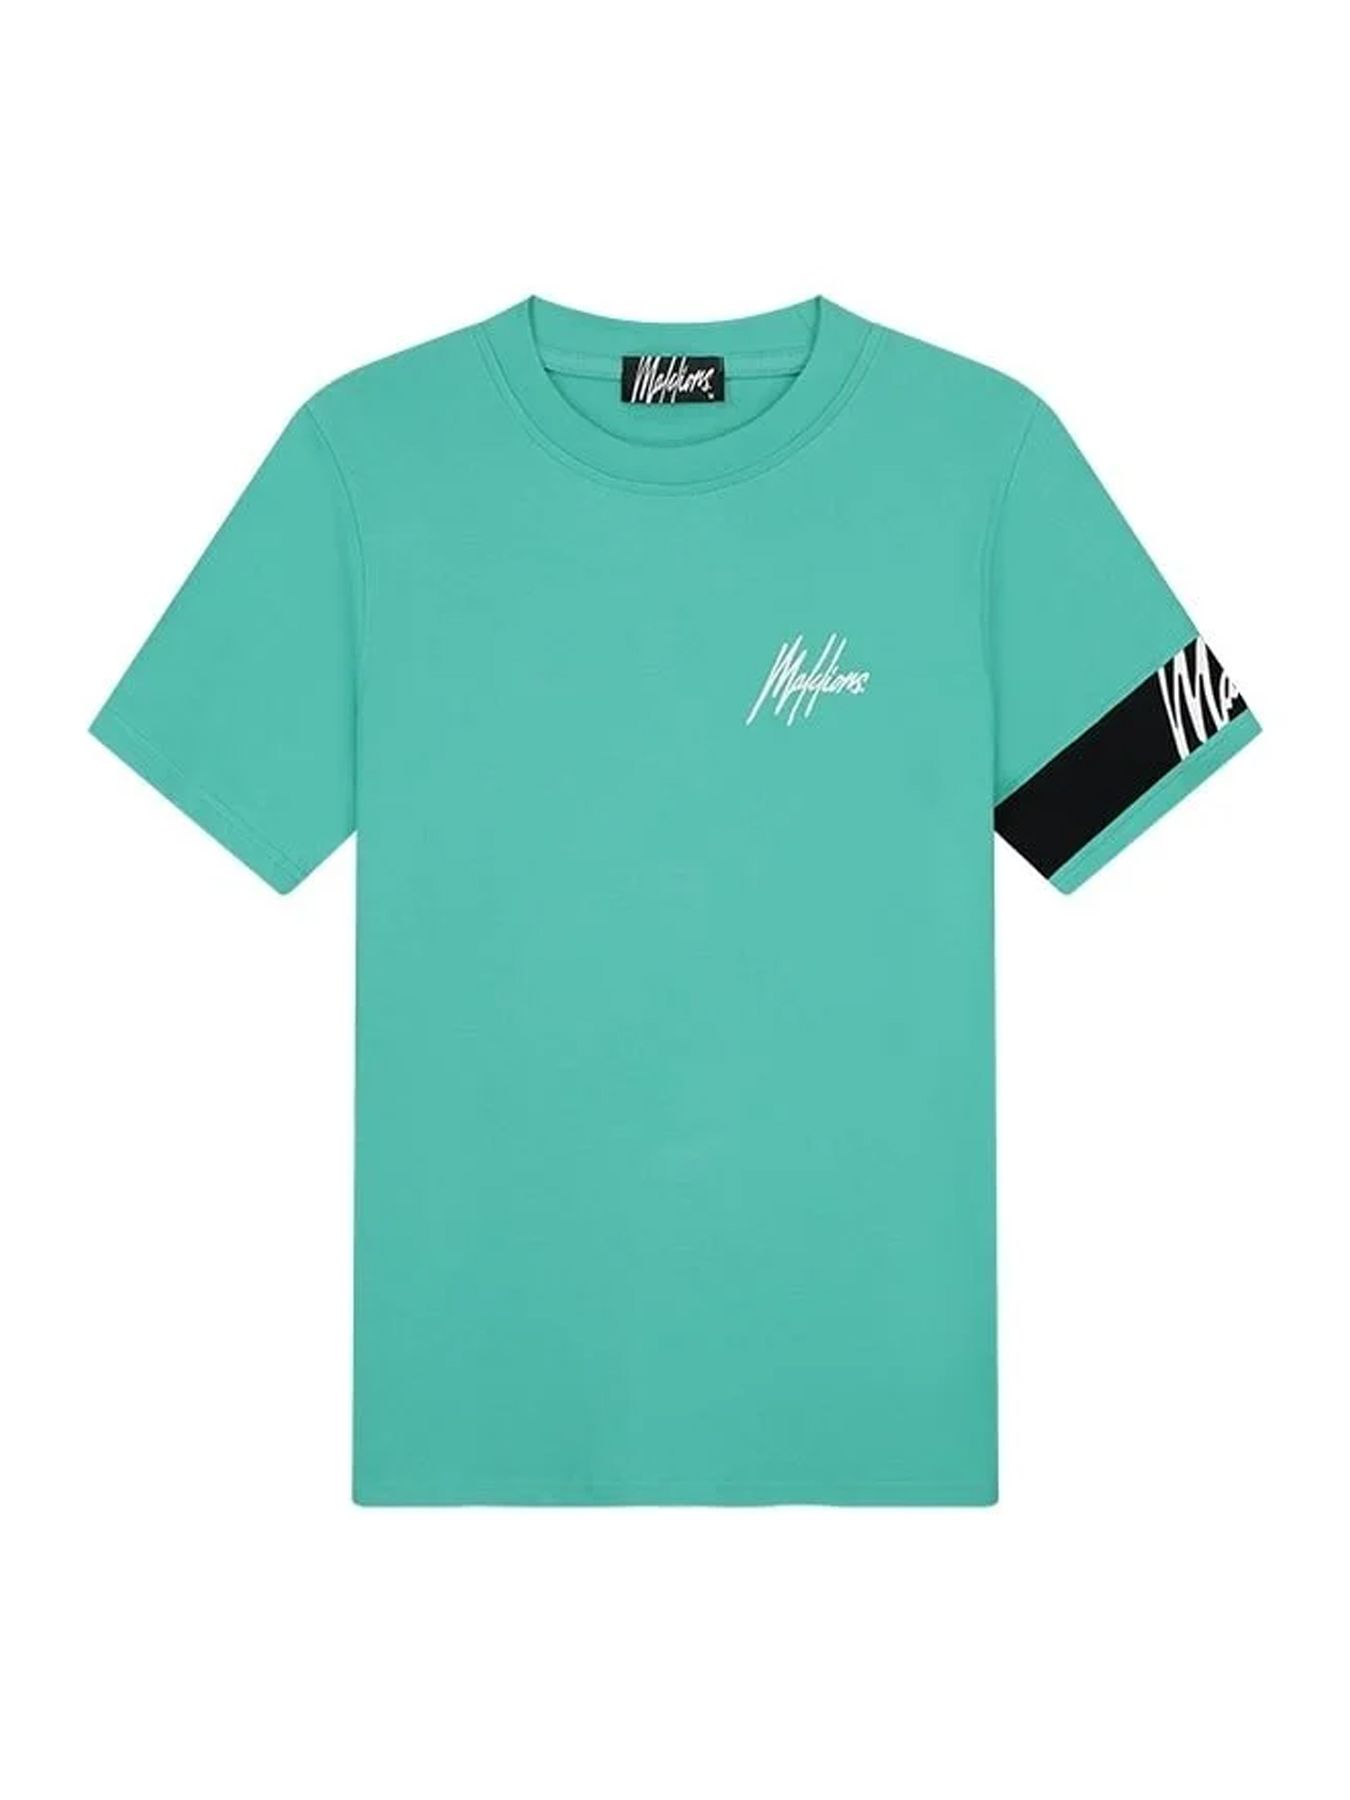 Malelions Men Captain t-shirt Turquoise/black 00108669-984